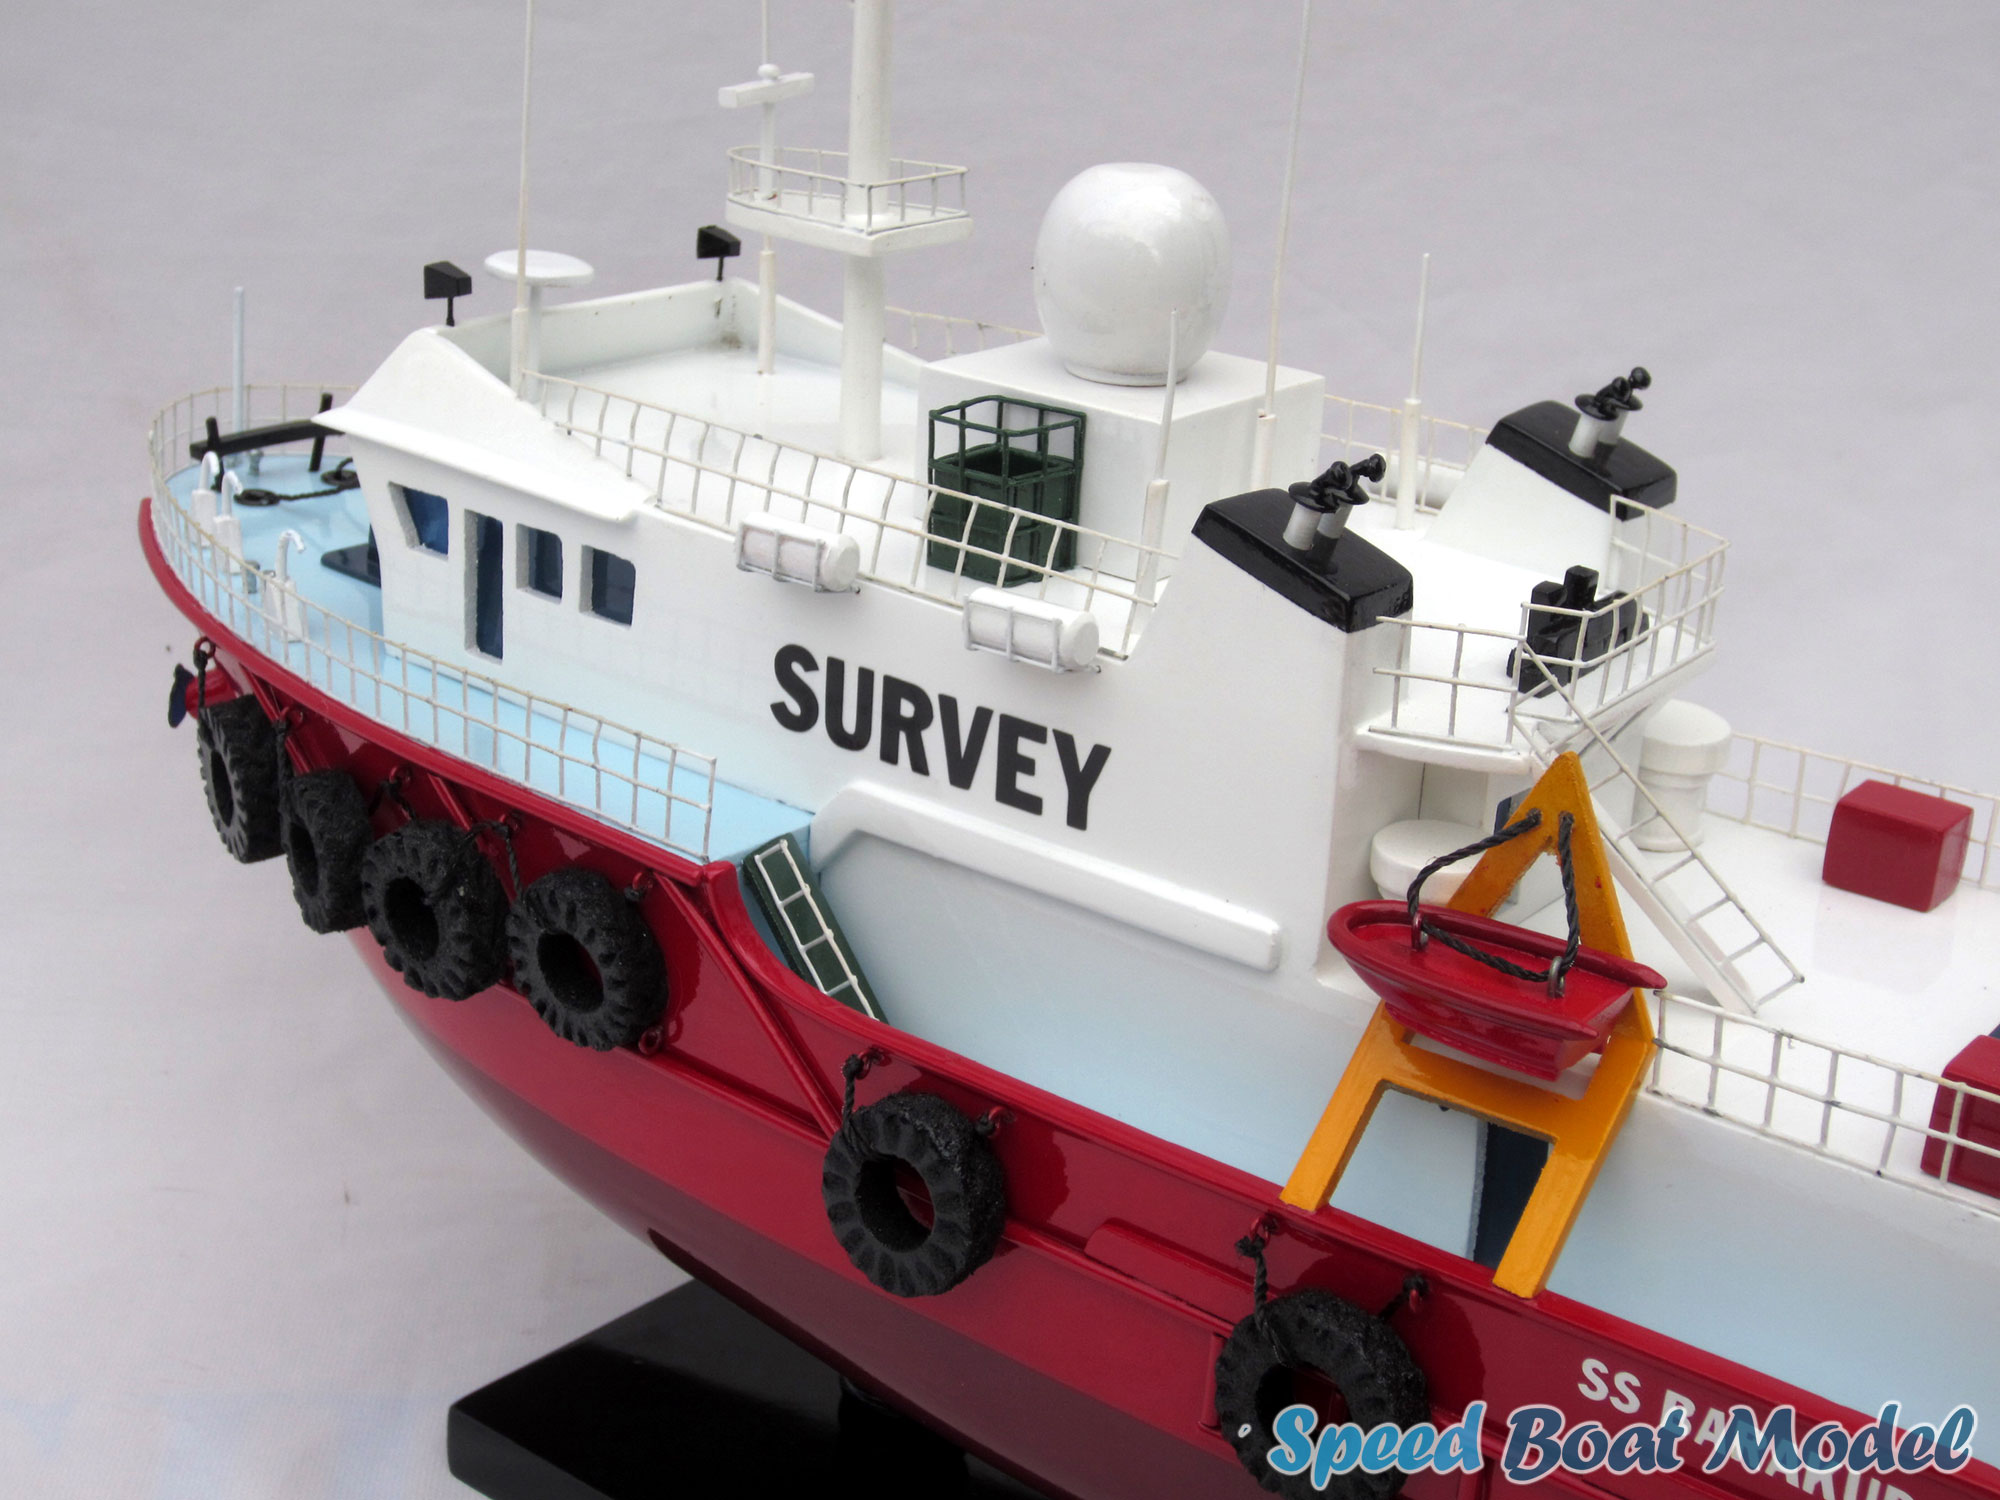 Ss Barakuda Commercial Ship Model 20.4